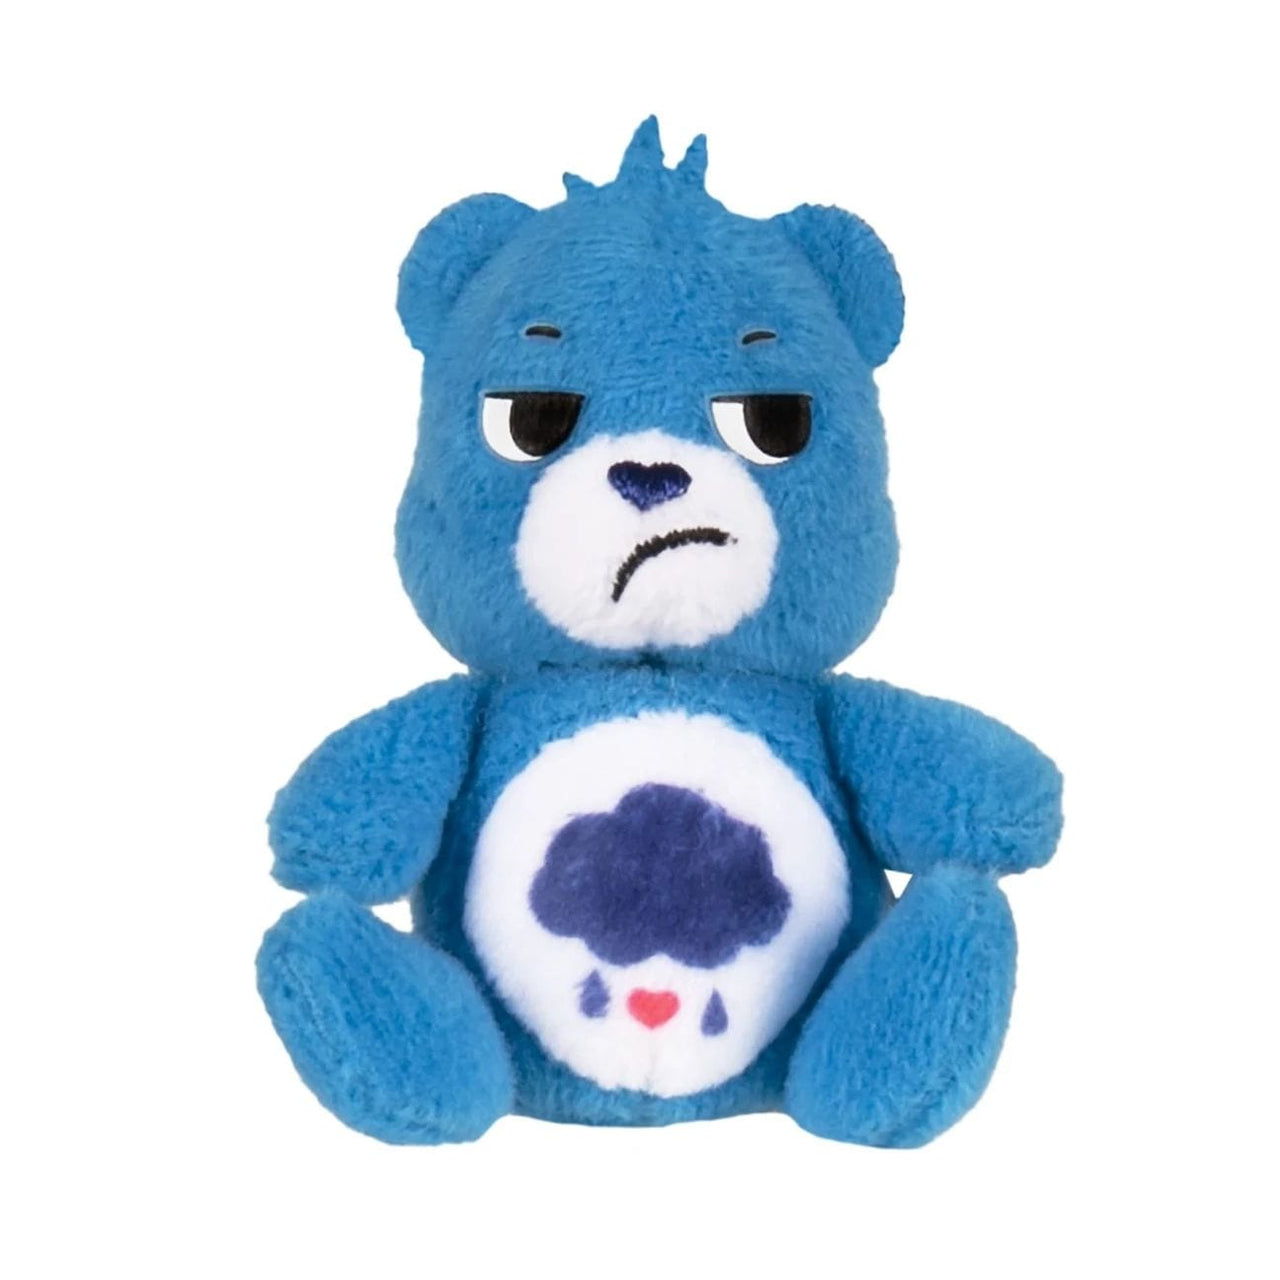 Basic Fun Care Bears Care Bears Micro Plush Grumpy Bear (7498761928952)